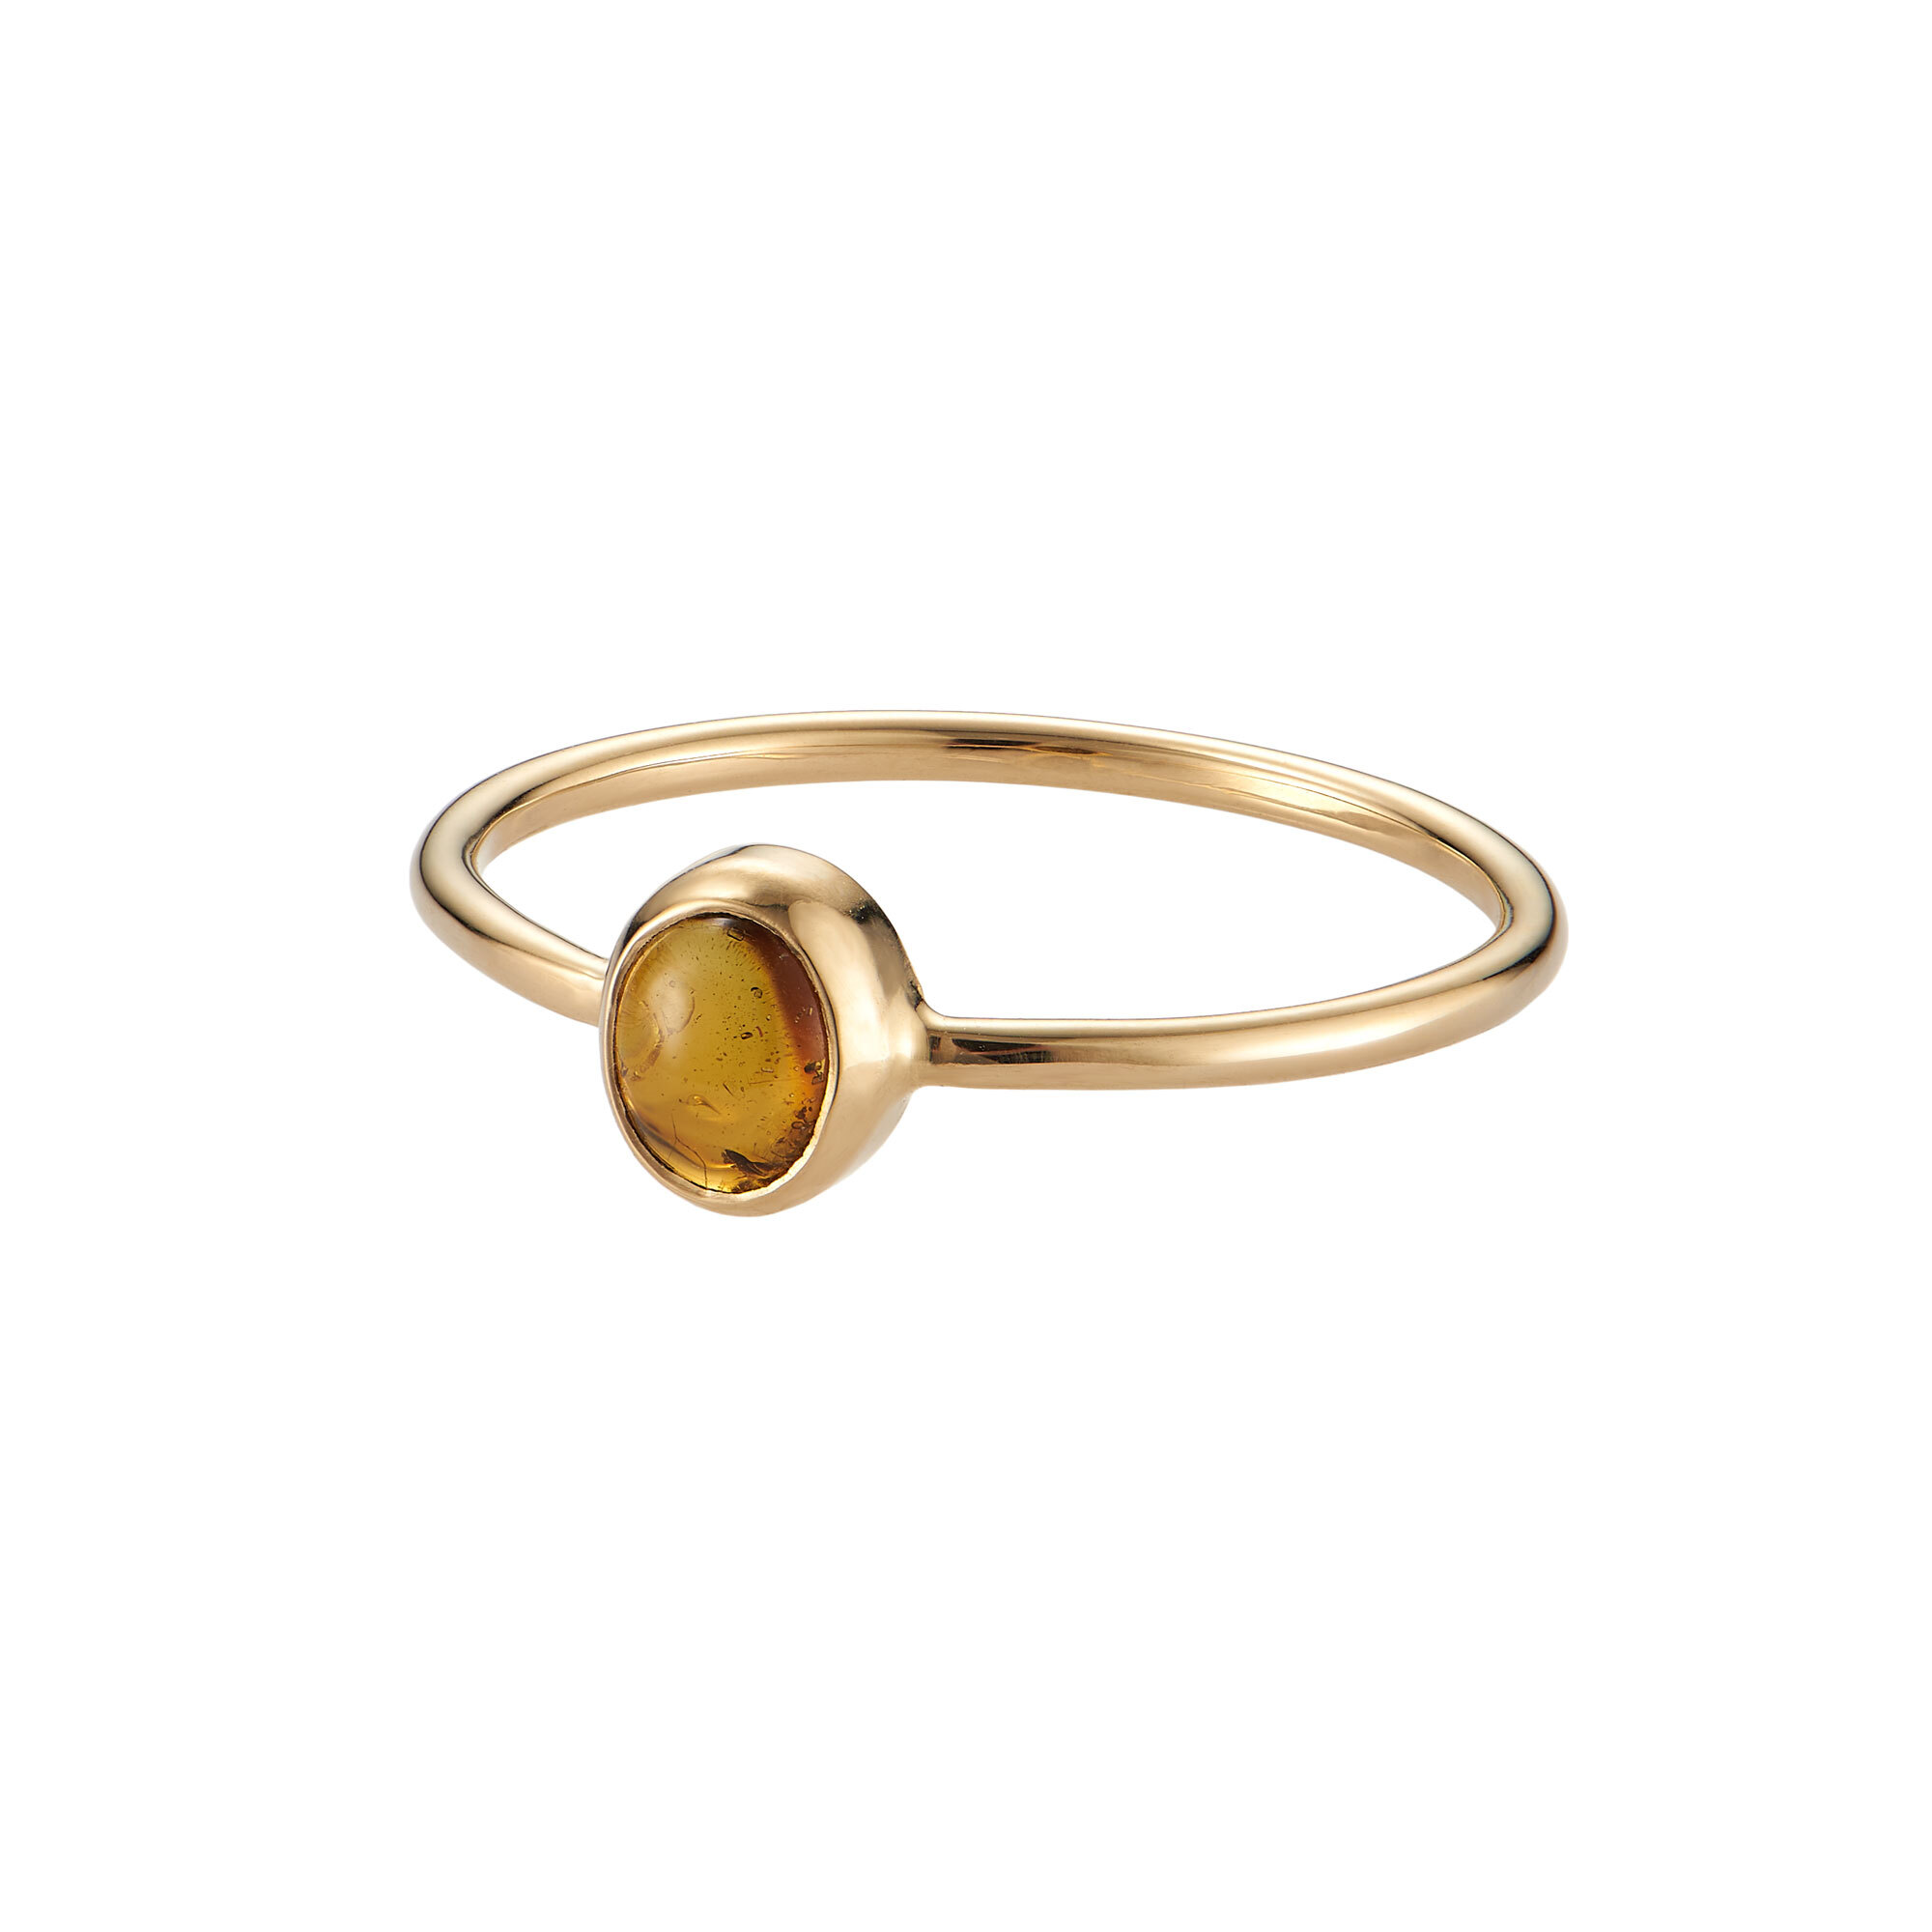 lab173 кольцо с турмалином 16 размера (лимонное золото)